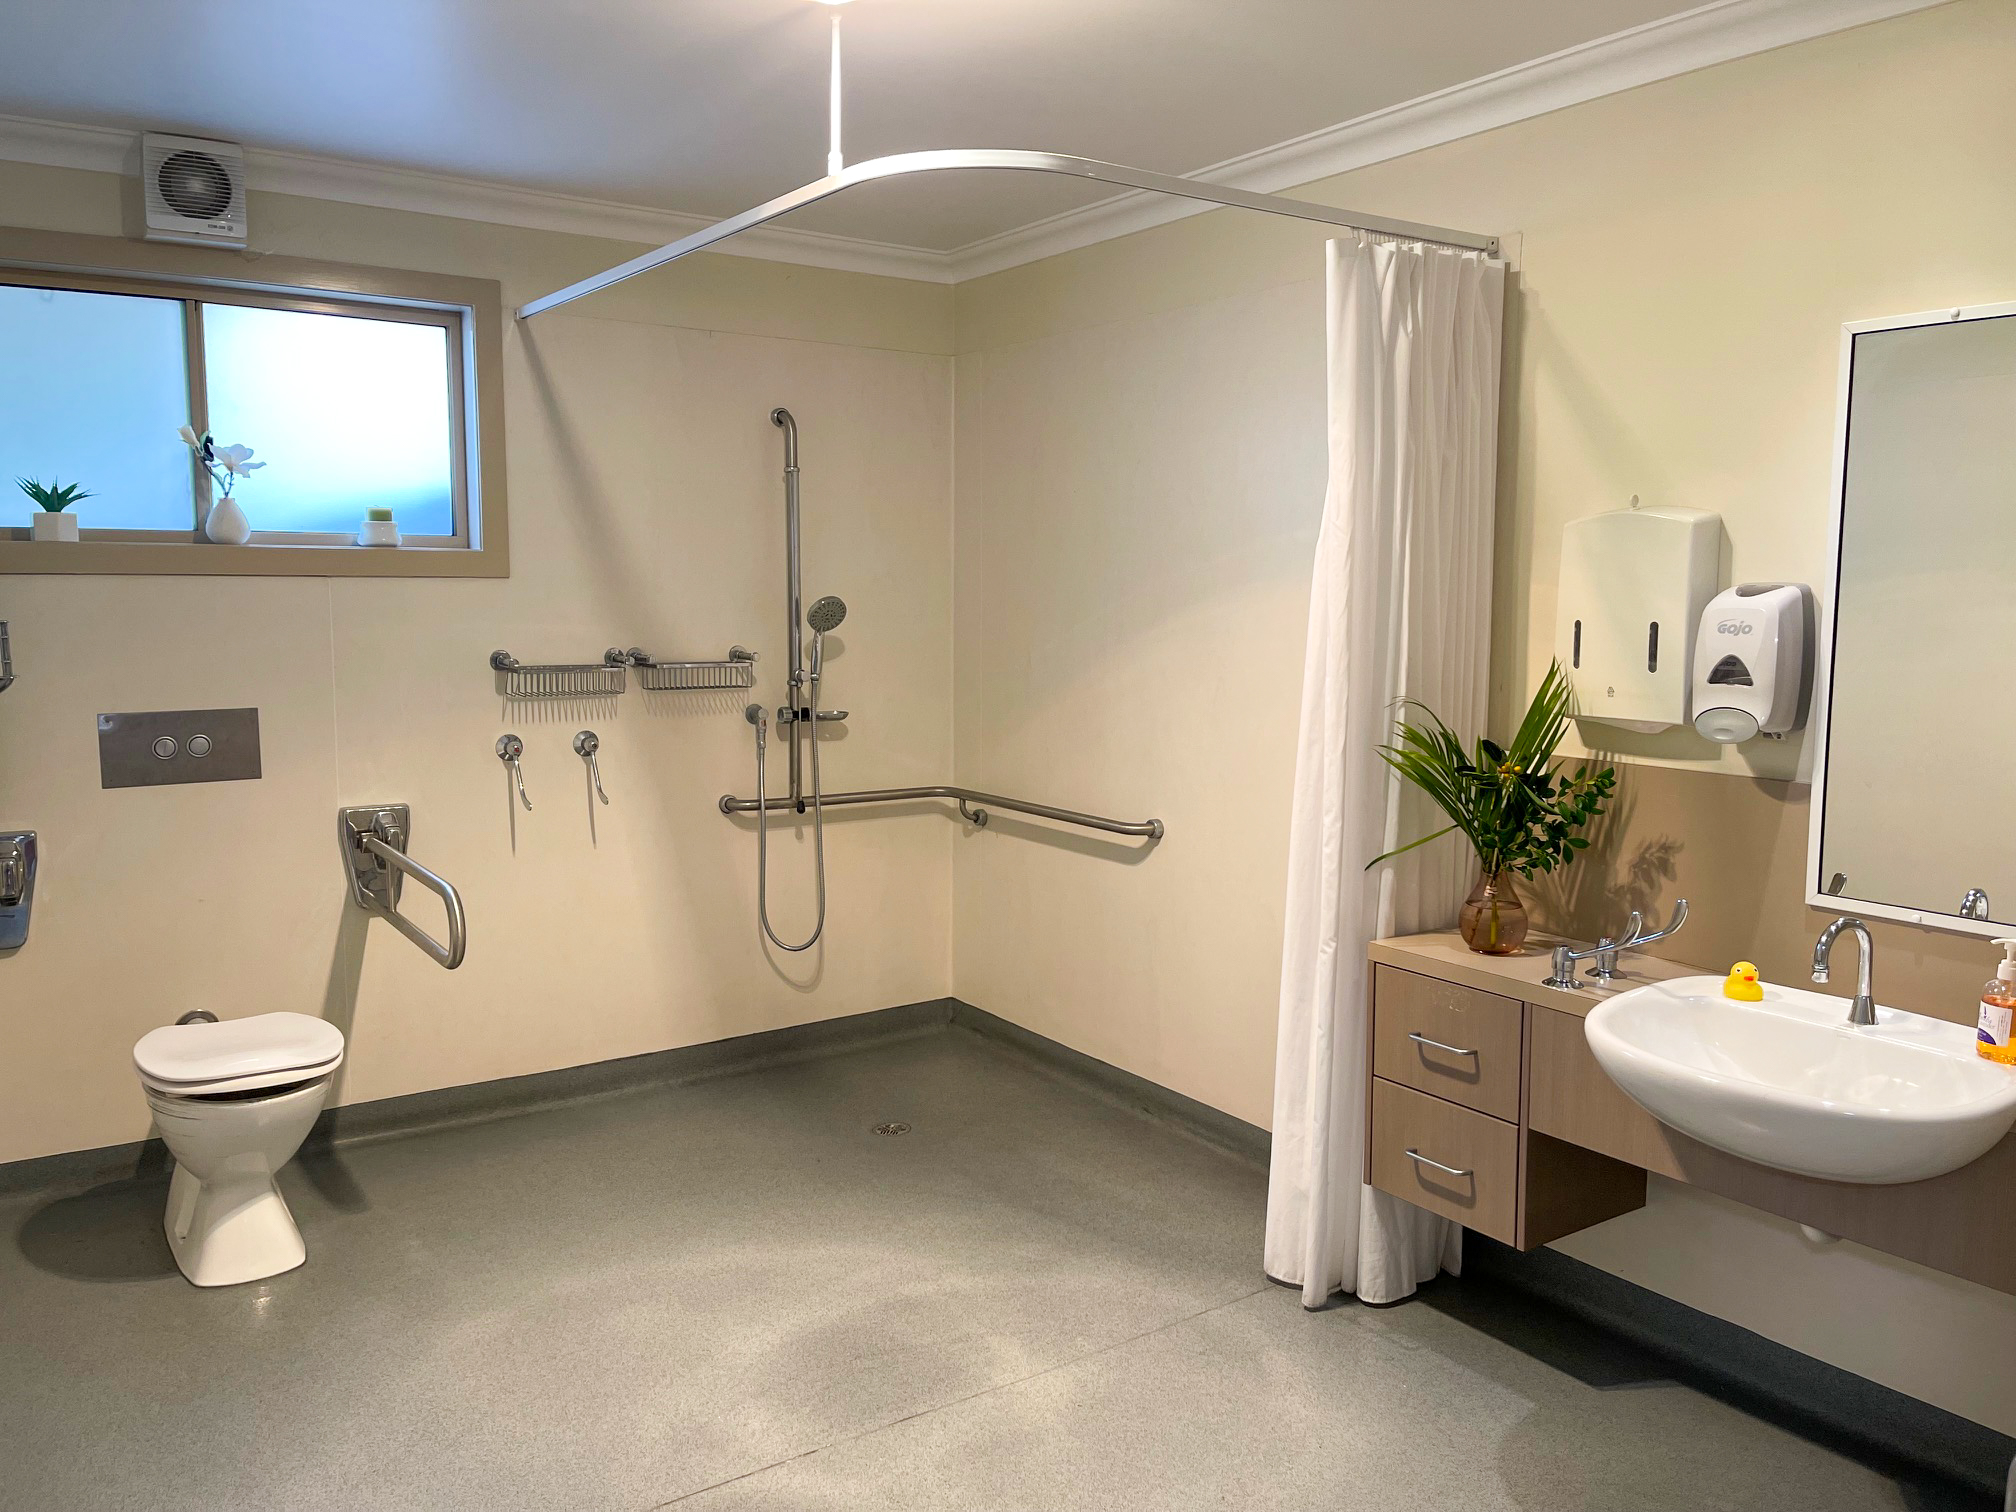 A wet room bathroom with cream walls